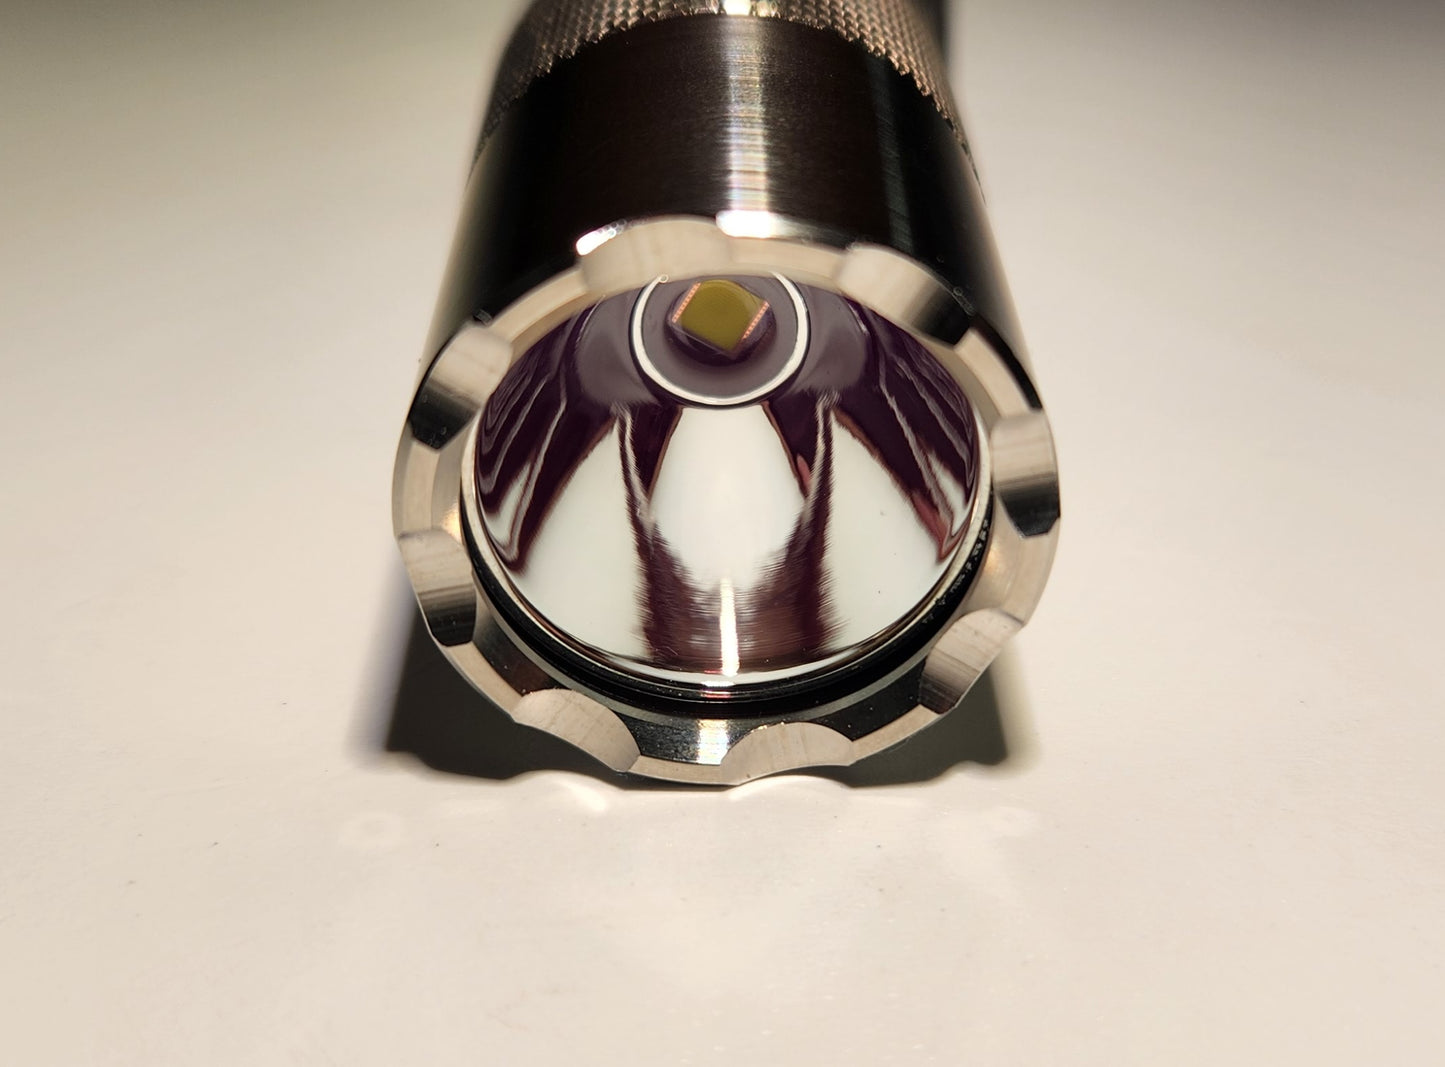 Lumintop FW1A Pro Titanium, Brass OR Aluminum Custom Led Flashlight